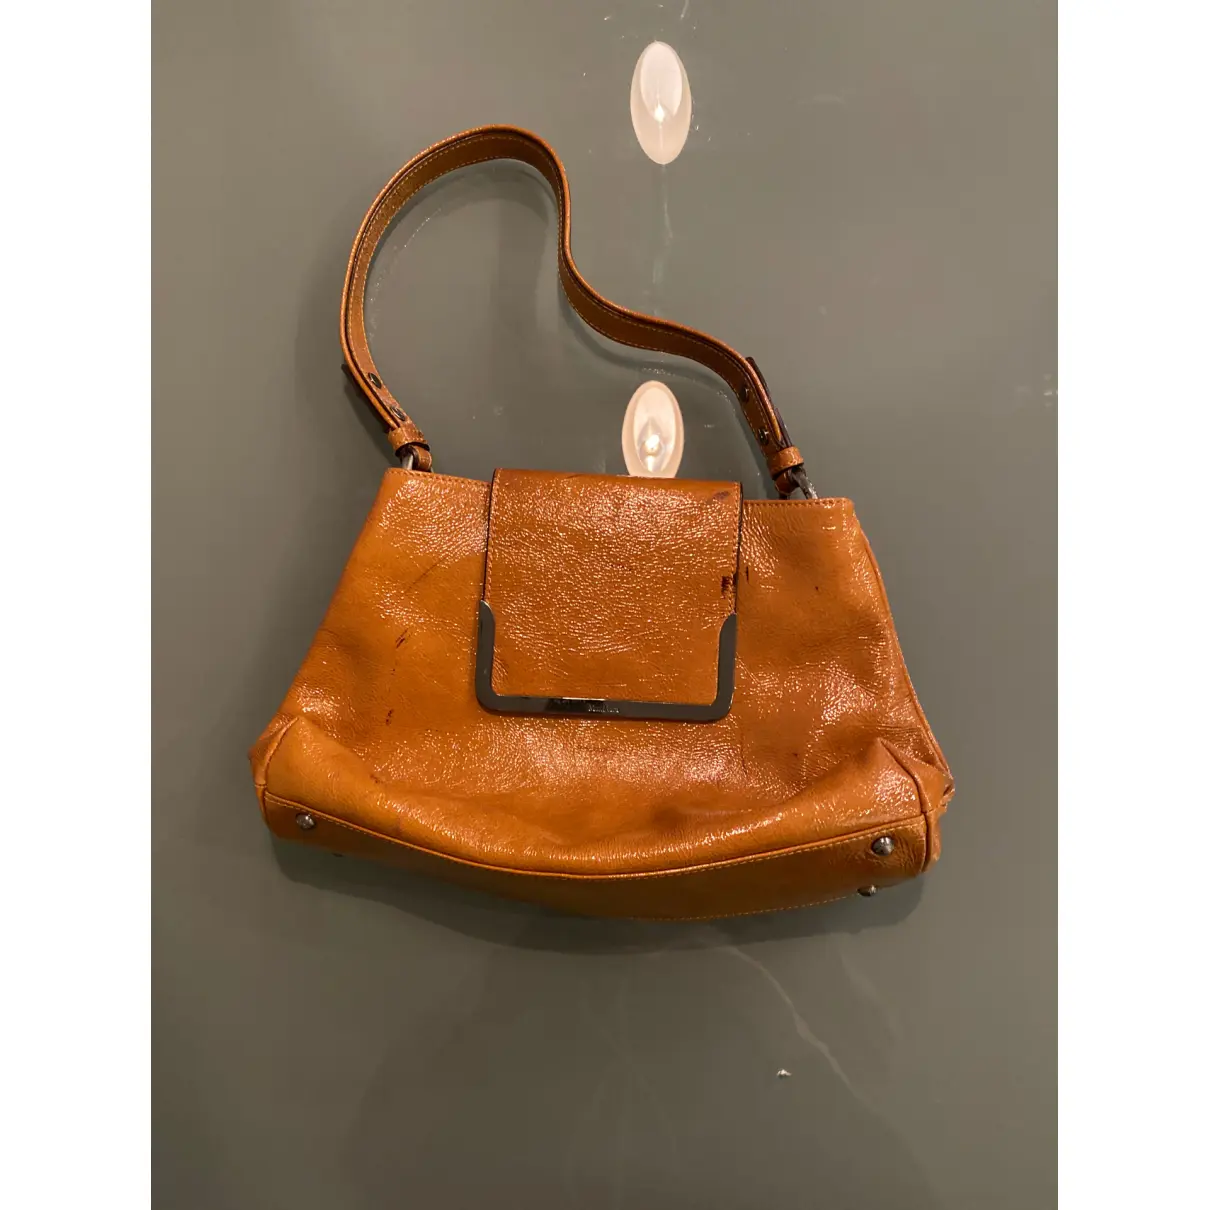 Buy Max Mara Patent leather handbag online